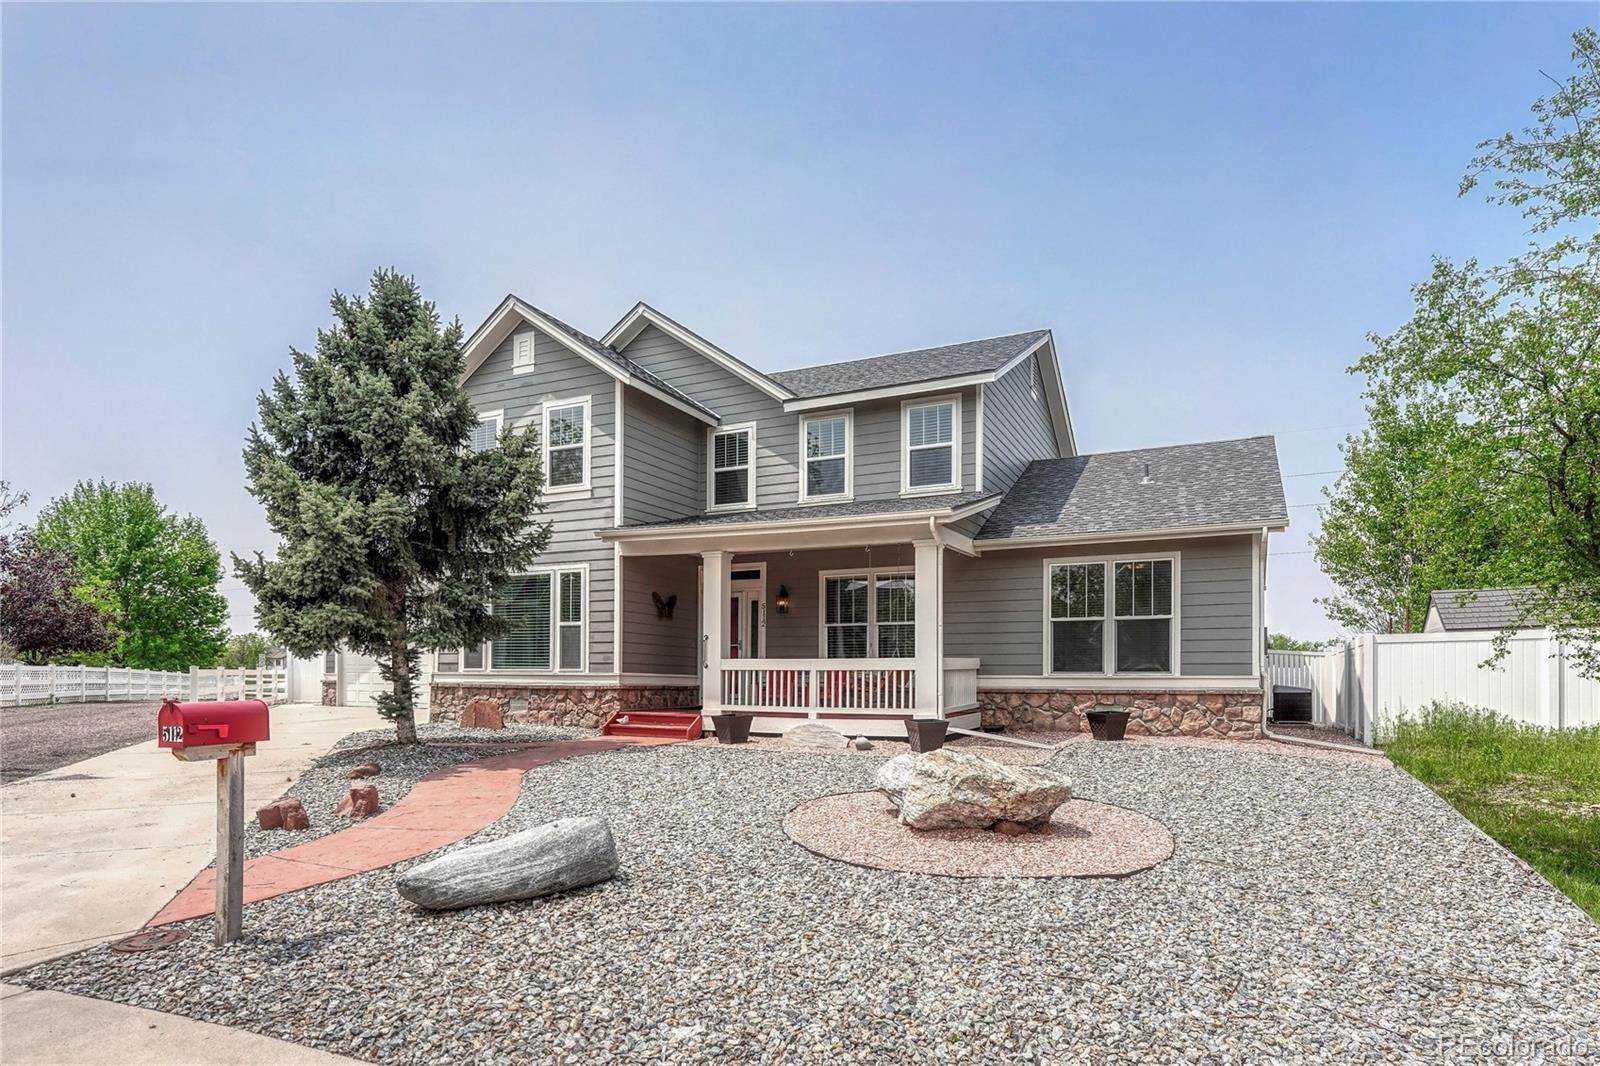 2. Single Family Homes for Sale at 5112 Dvorak Circle Frederick, Colorado 80504 United States